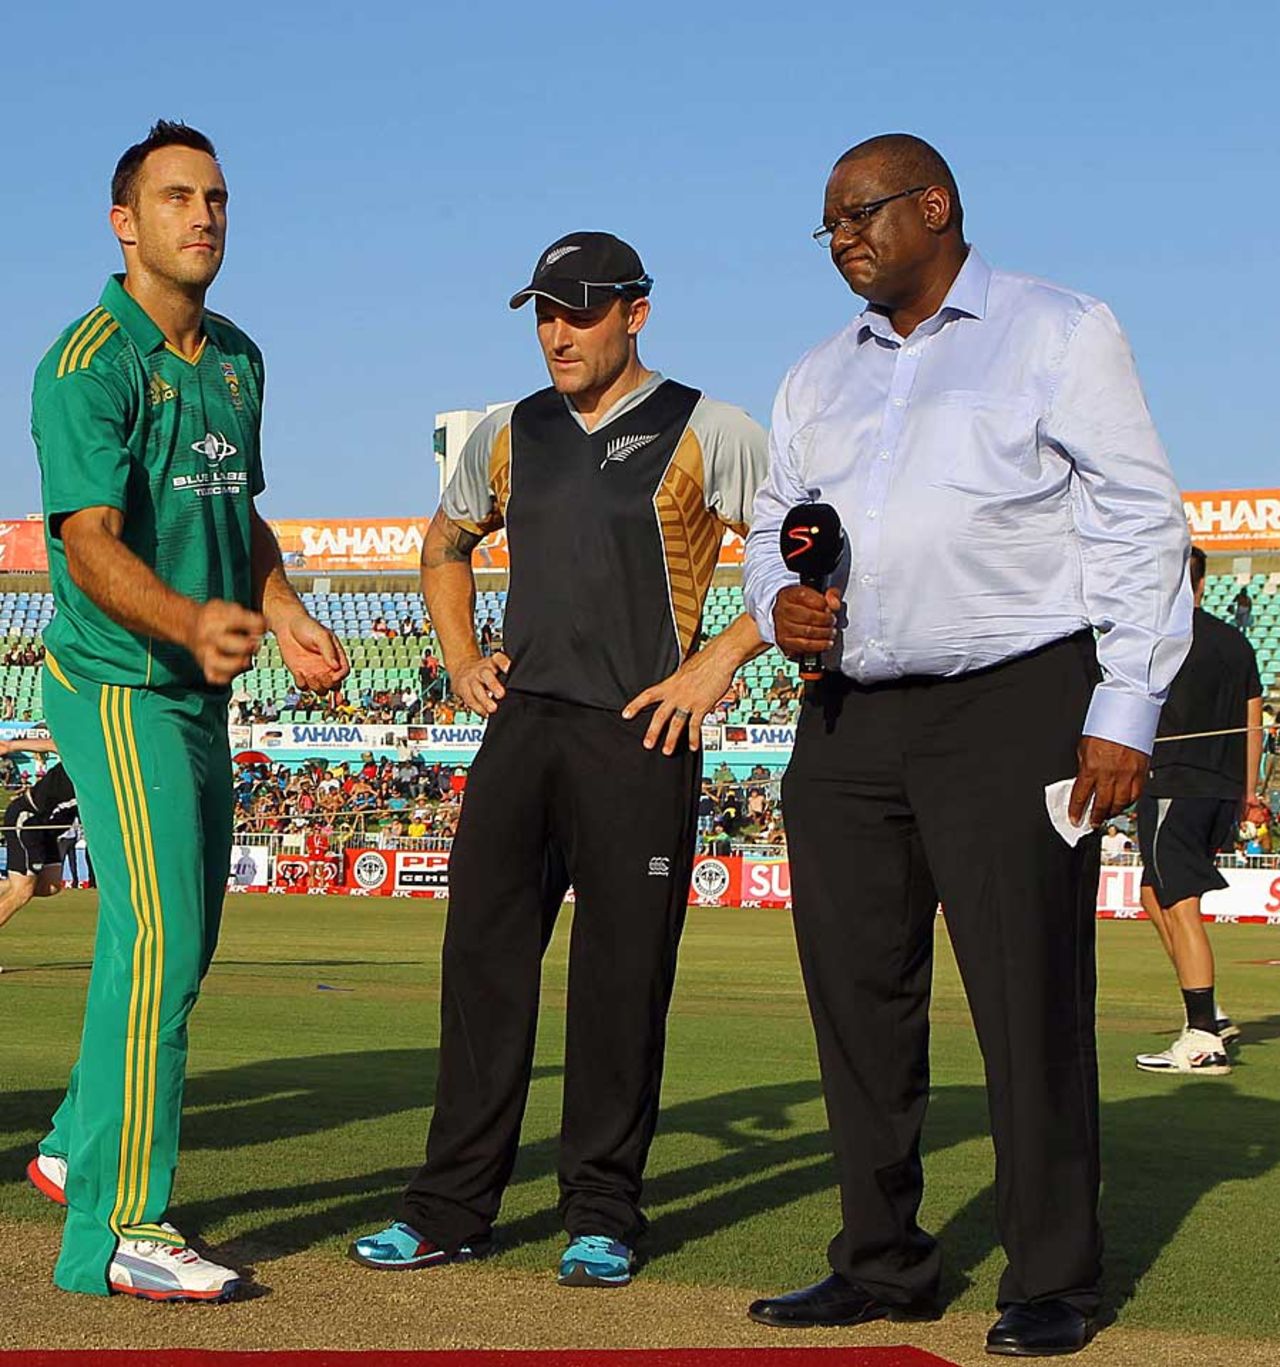 Faf du Plessis tosses the coin as Brendon McCullum looks on, South Africa v New Zealand, 1st Twenty20 international, Durban, December 21, 2012